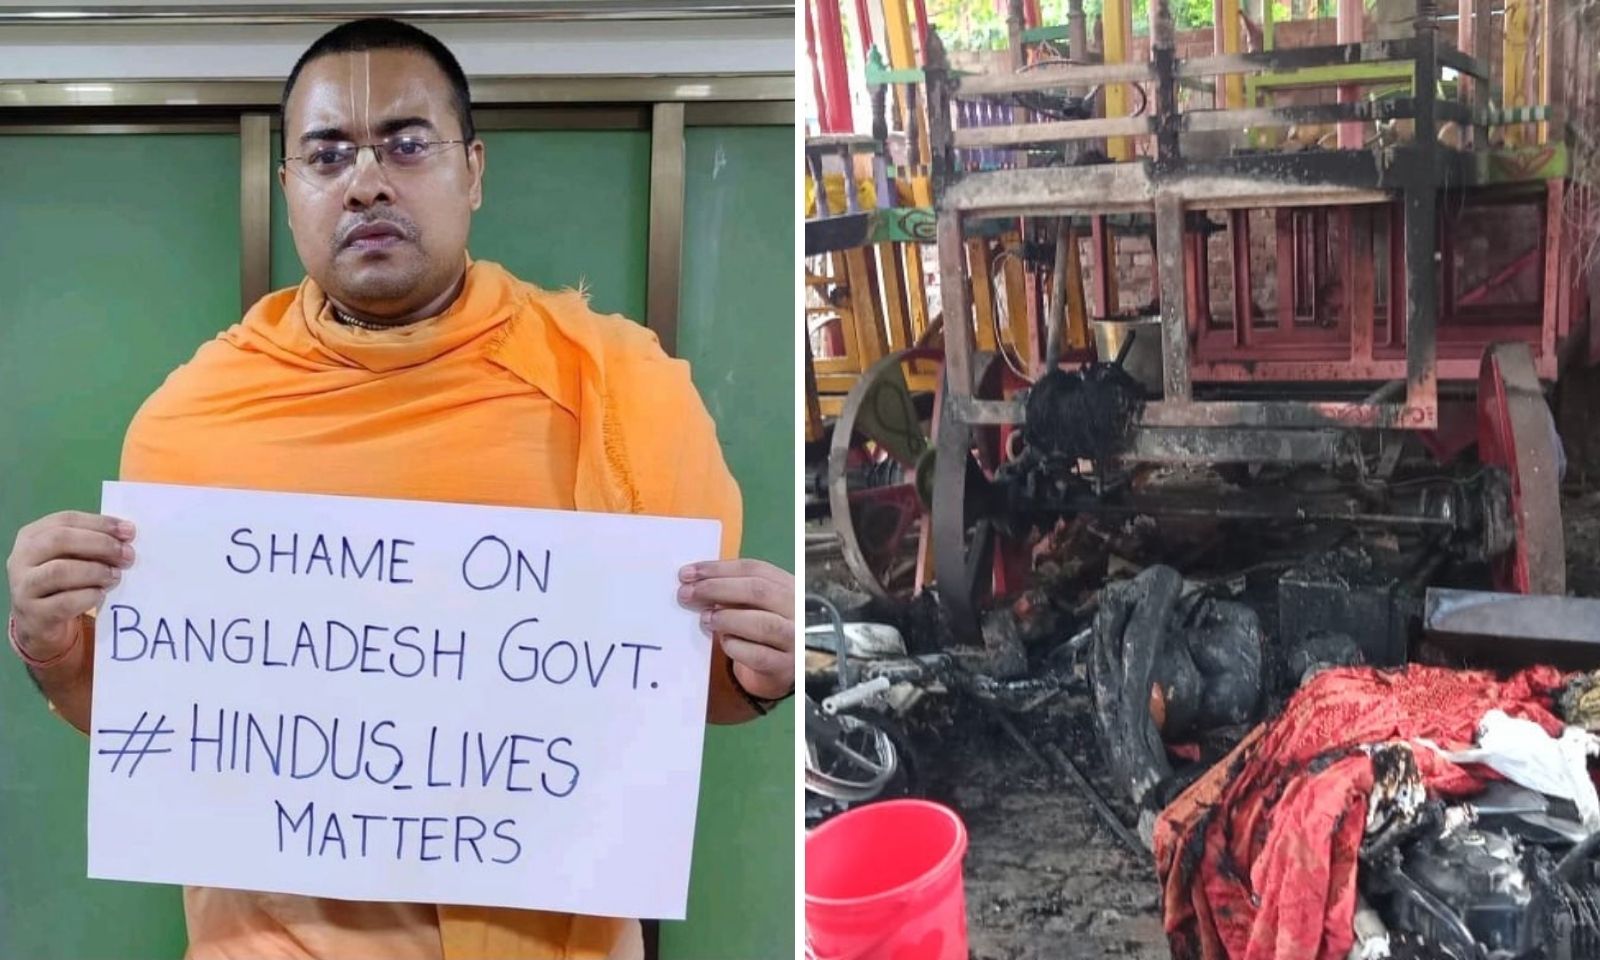 Bangladesh Hindu attack 2021: BJP minority workers condemned the Bangladesh incident